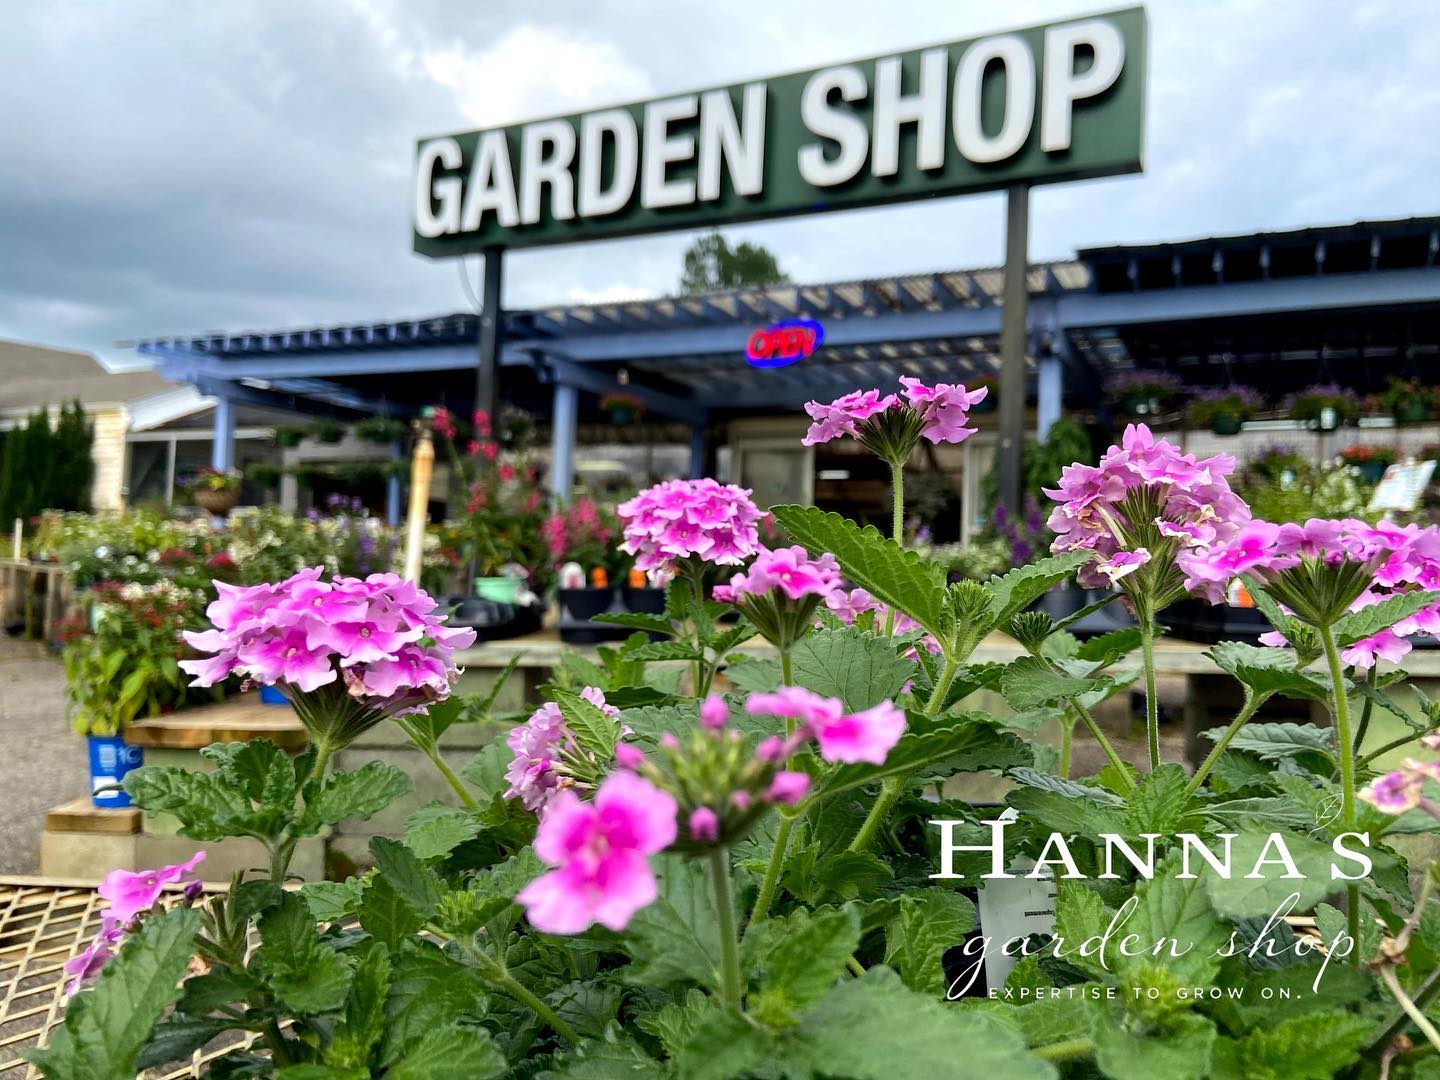 Hanna's Garden Shop